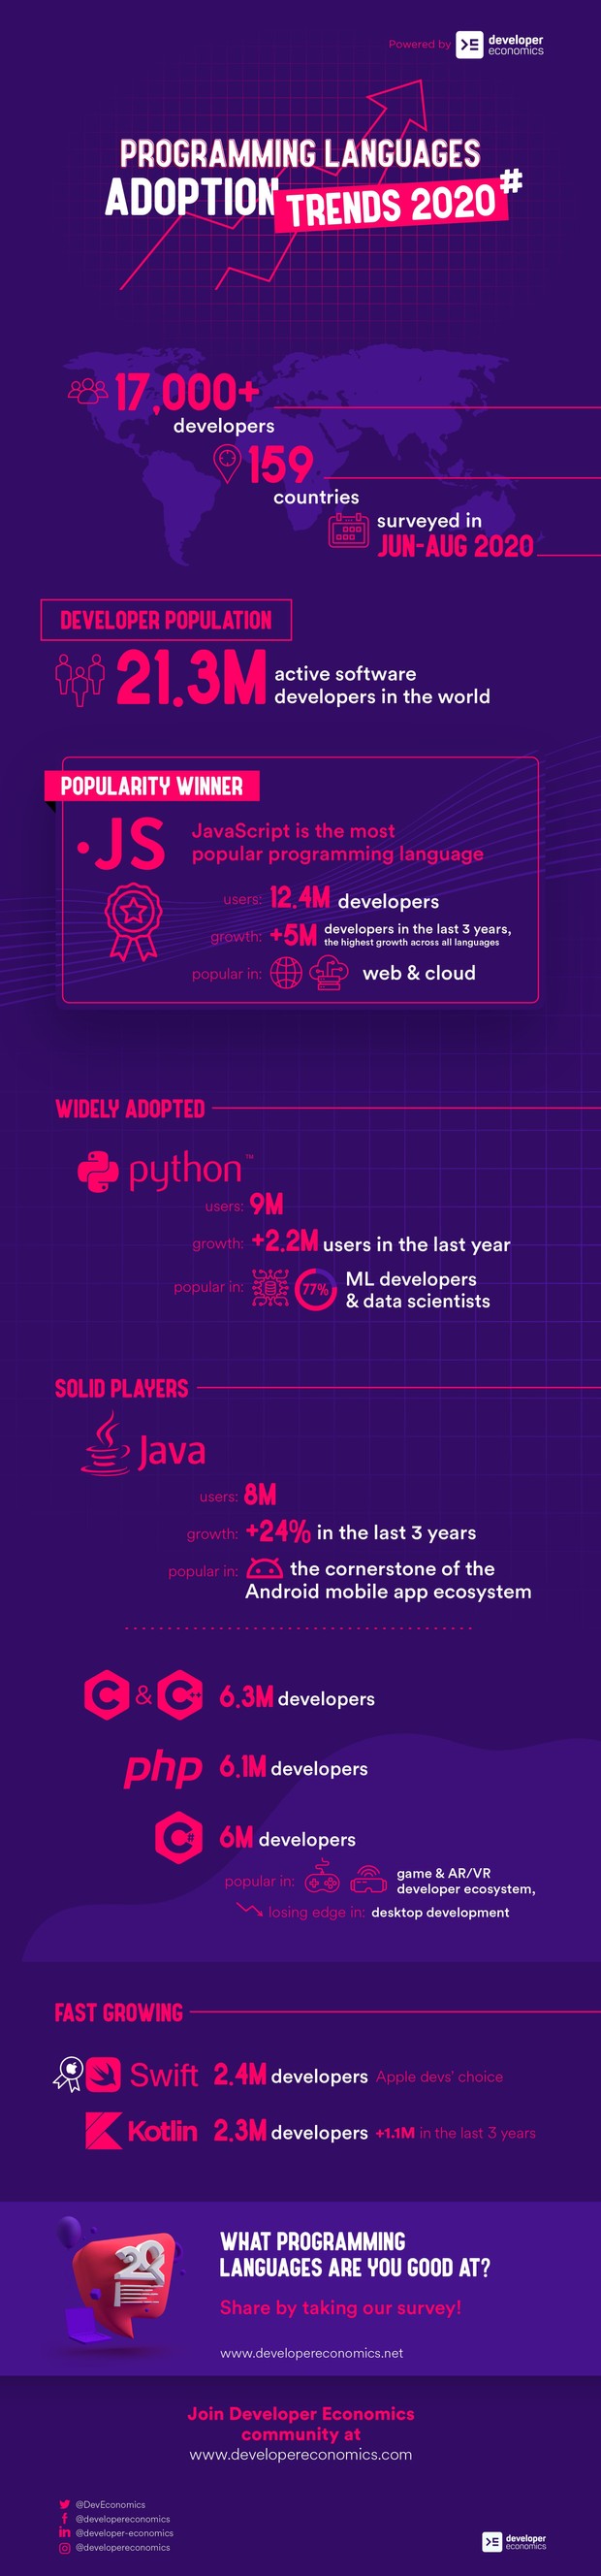 Infographic: Programming languages adoption trends 2020